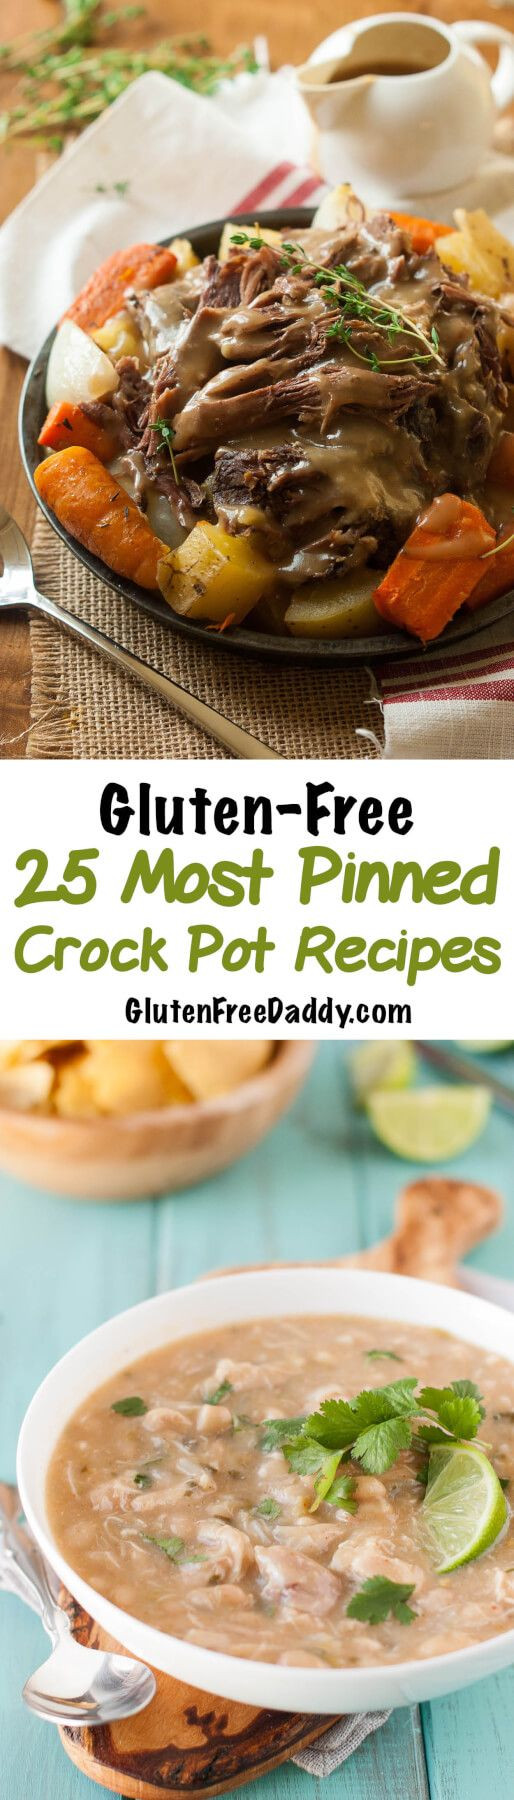 Dairy Free Crock Pot Recipes
 Best 25 Gluten free ideas on Pinterest